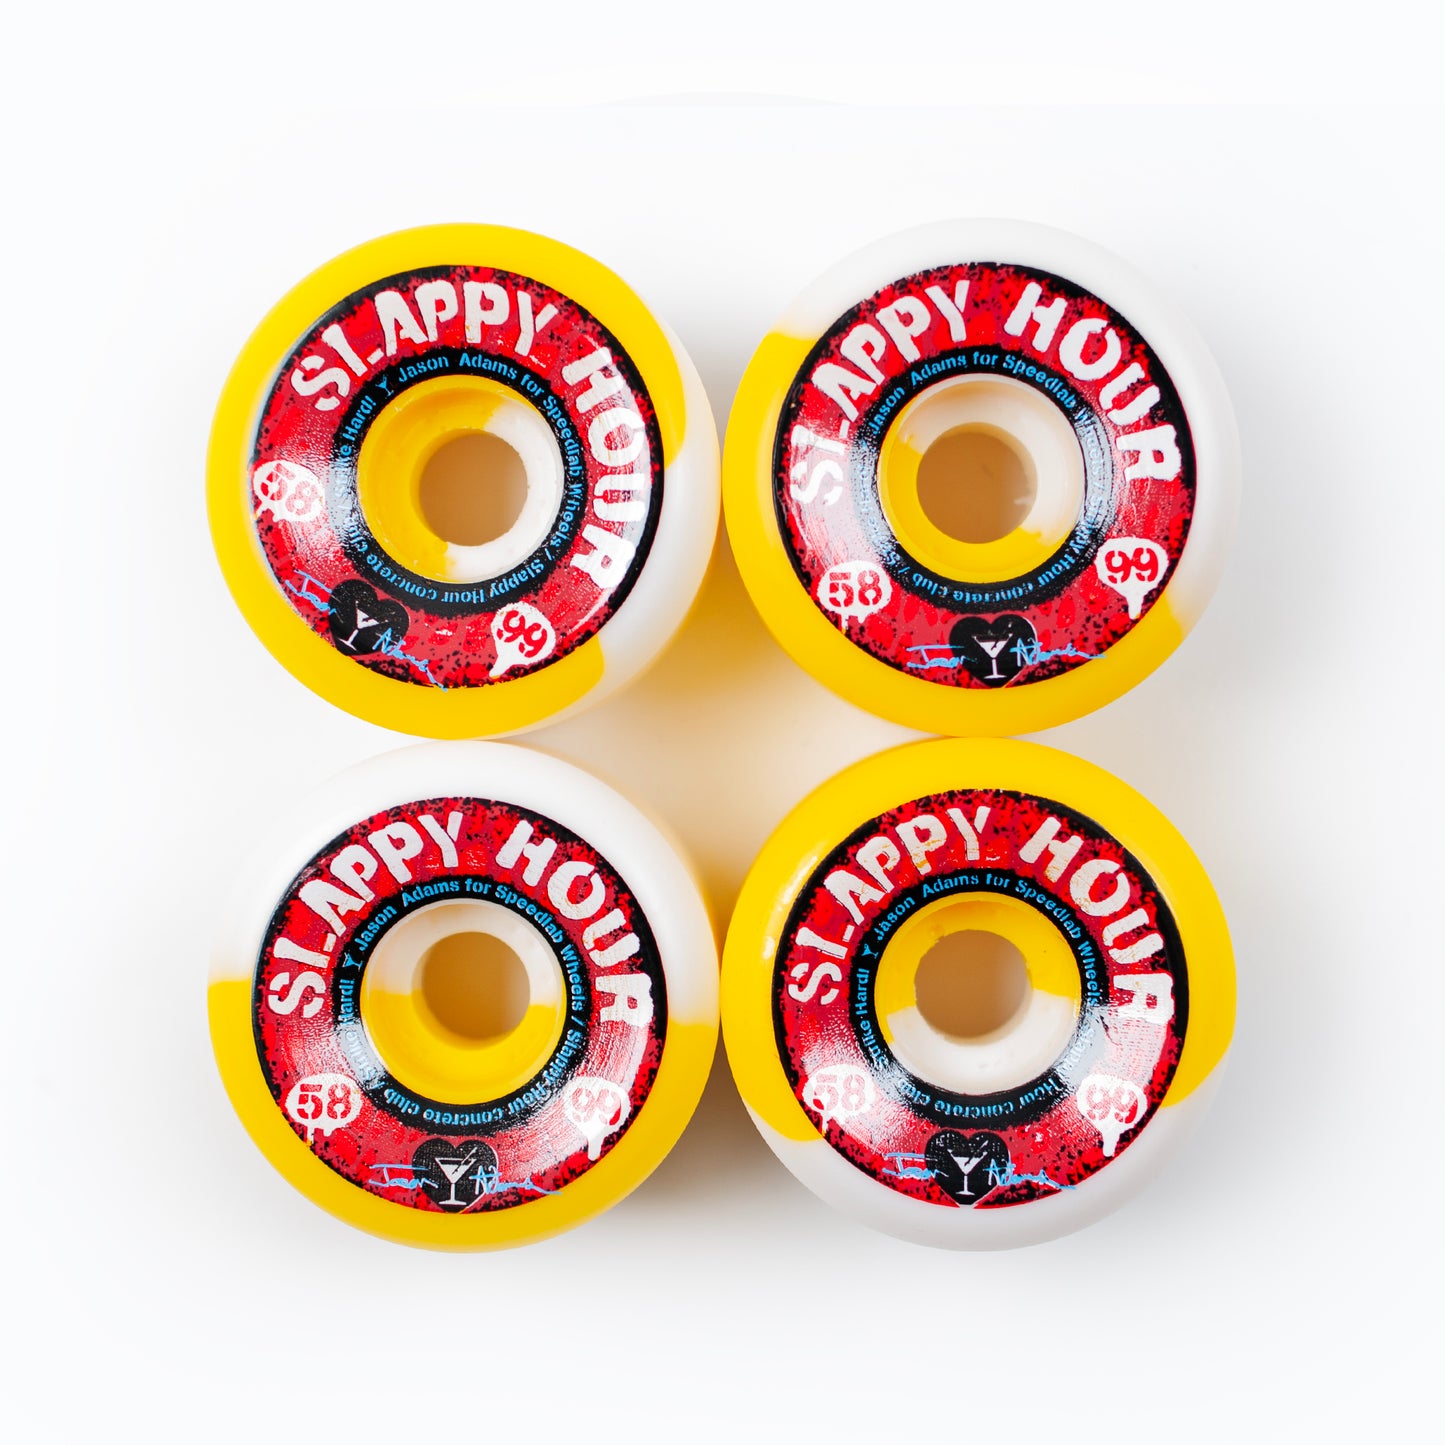 Speedlab - 58mm 99a Slappy Hour Jason Adams Pro Wheels - White/ Yellow - Prime Delux Store